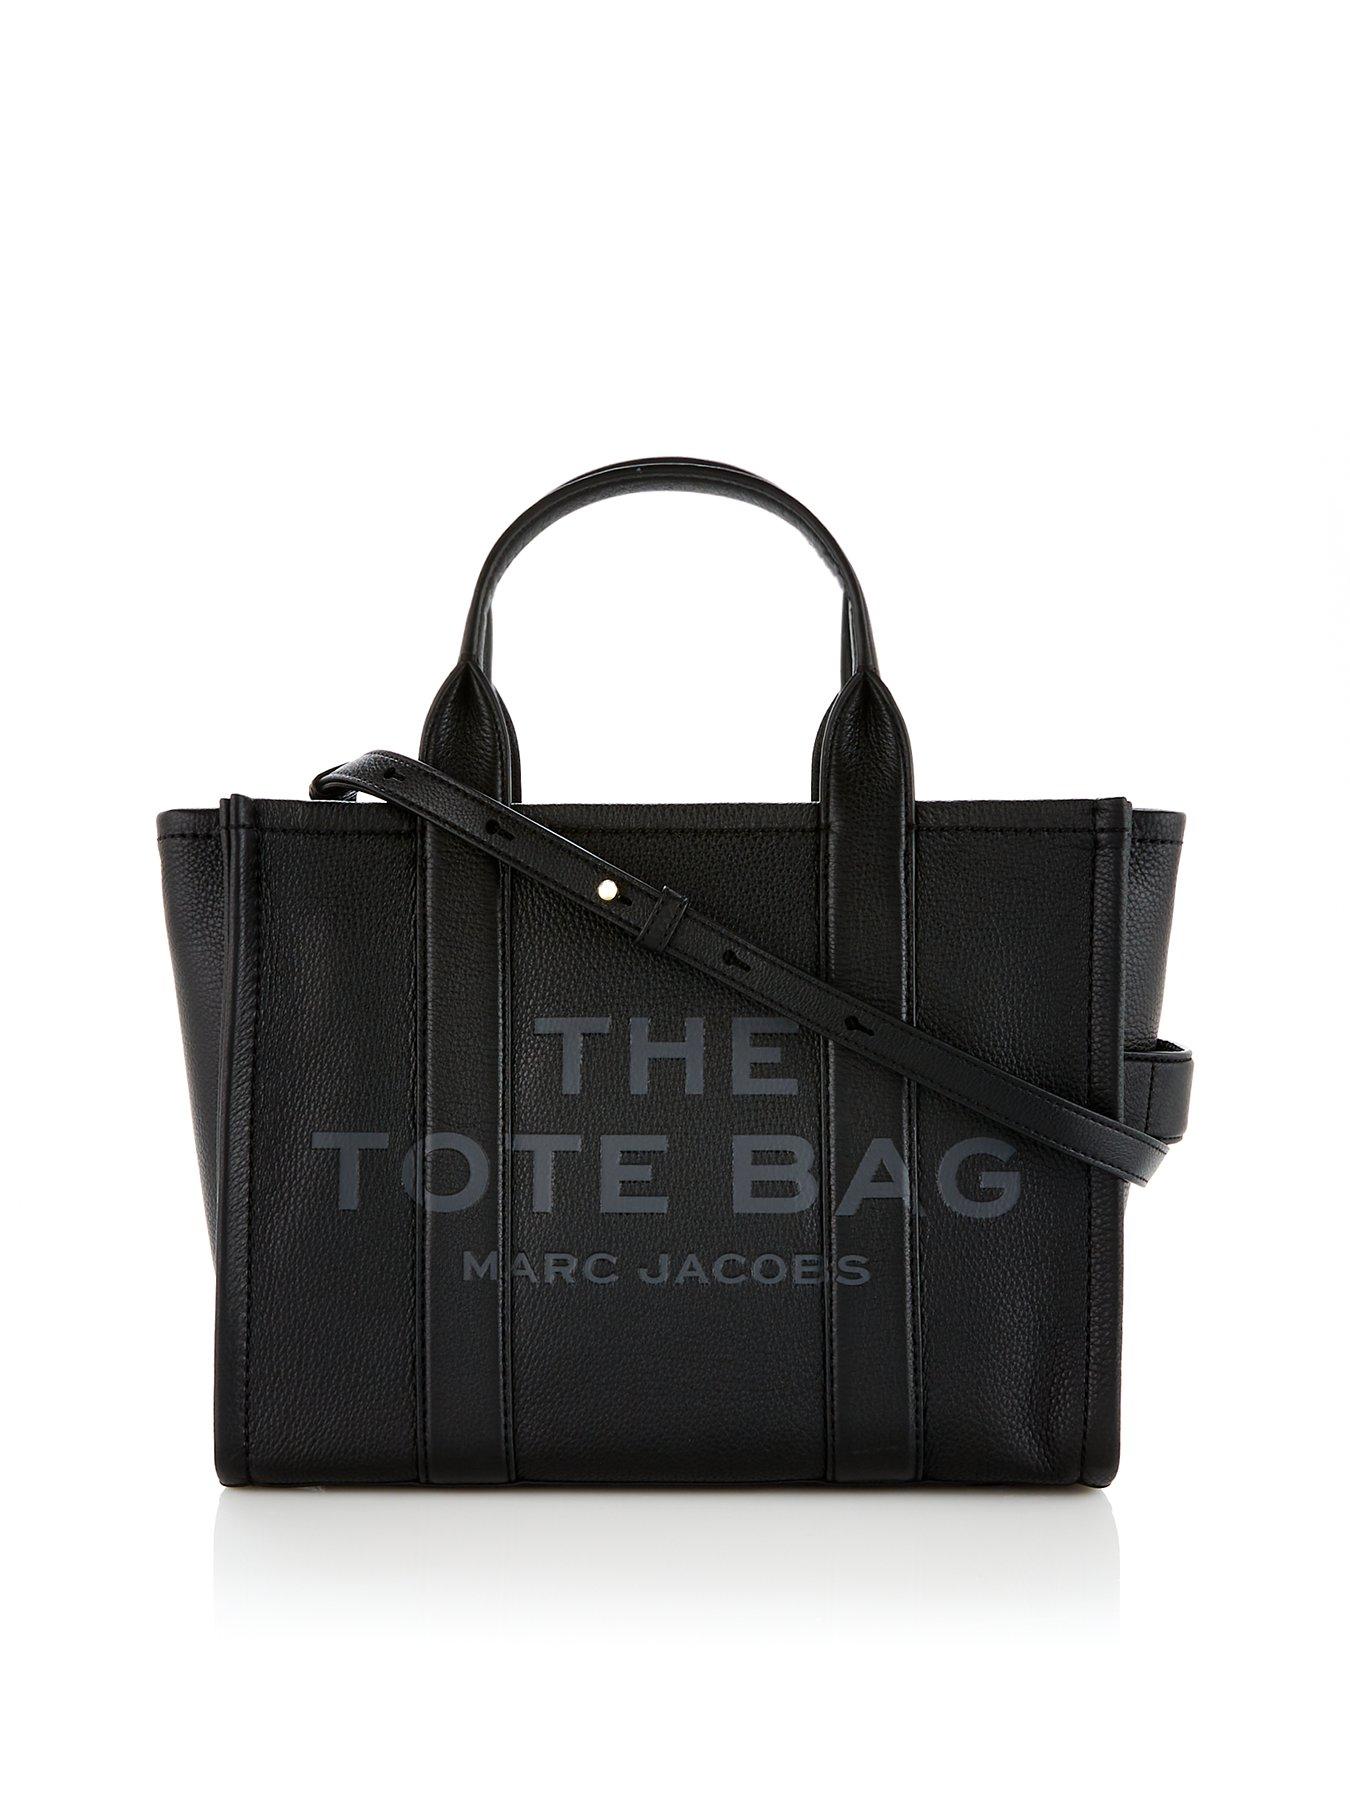 Retro Soft Leather Brown Men's Business Black Clutch Bag Purse Large R